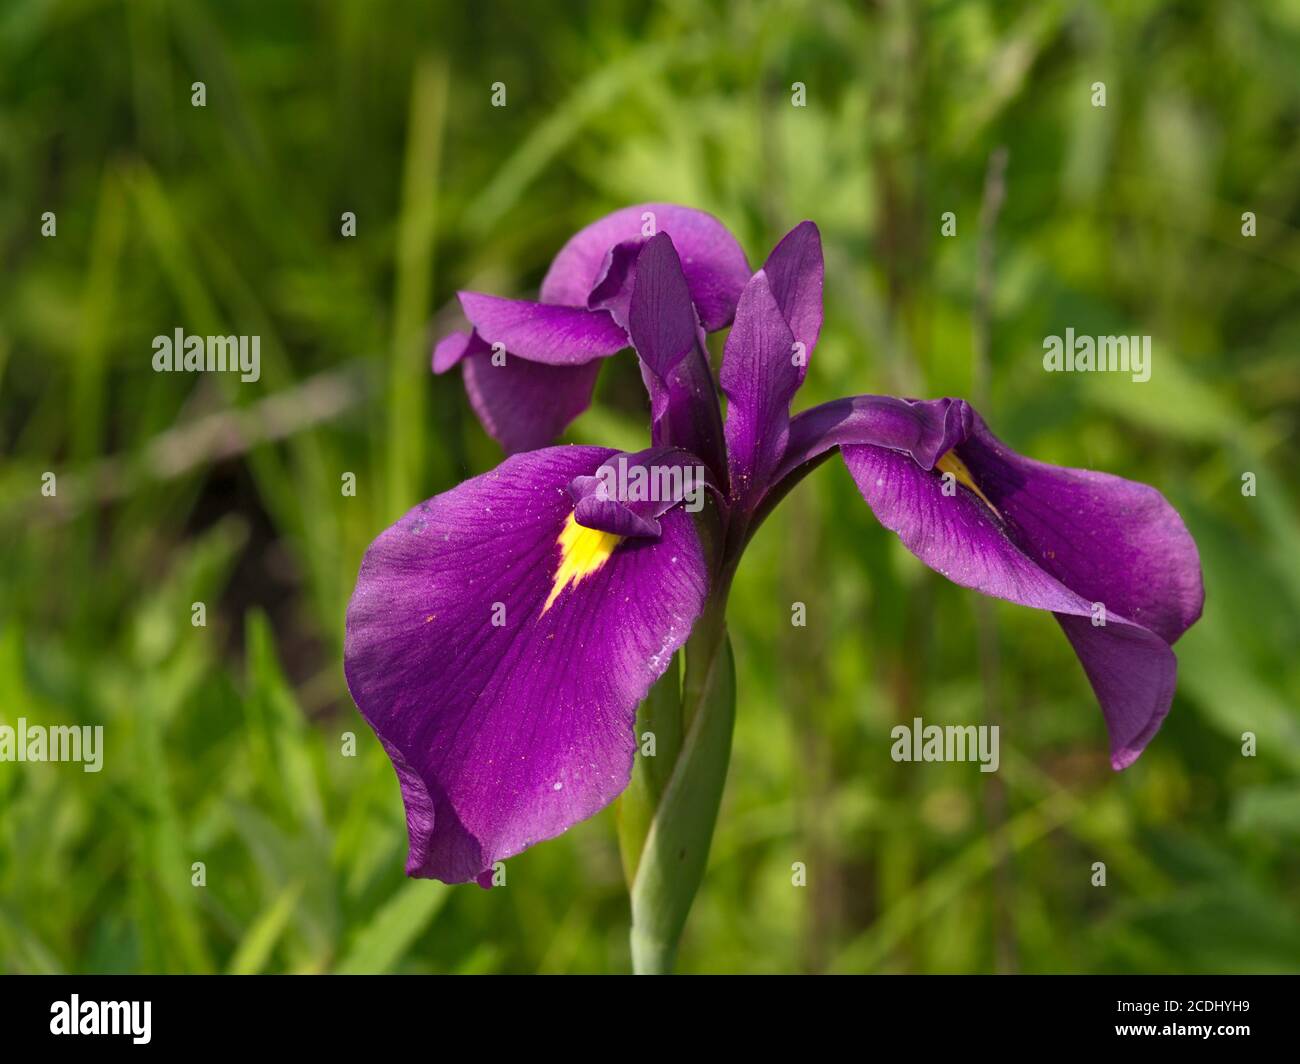 Iris flower largely Stock Photo